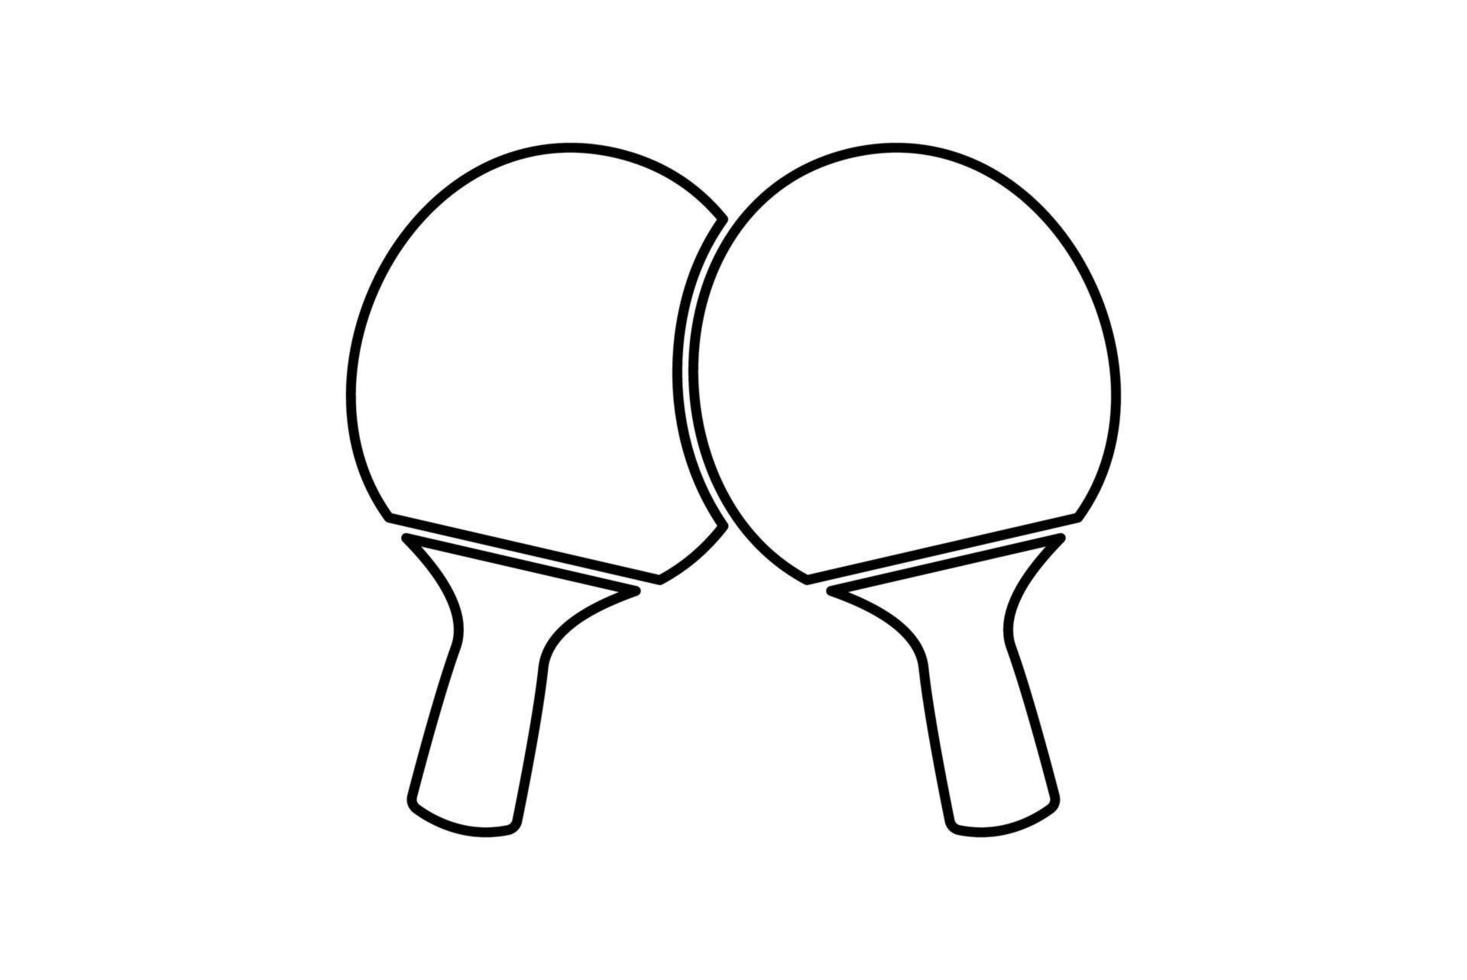 ping pong racchetta icona. Due attraversato ping pong racchette. tavolo tennis nero e bianca linea icona vettore